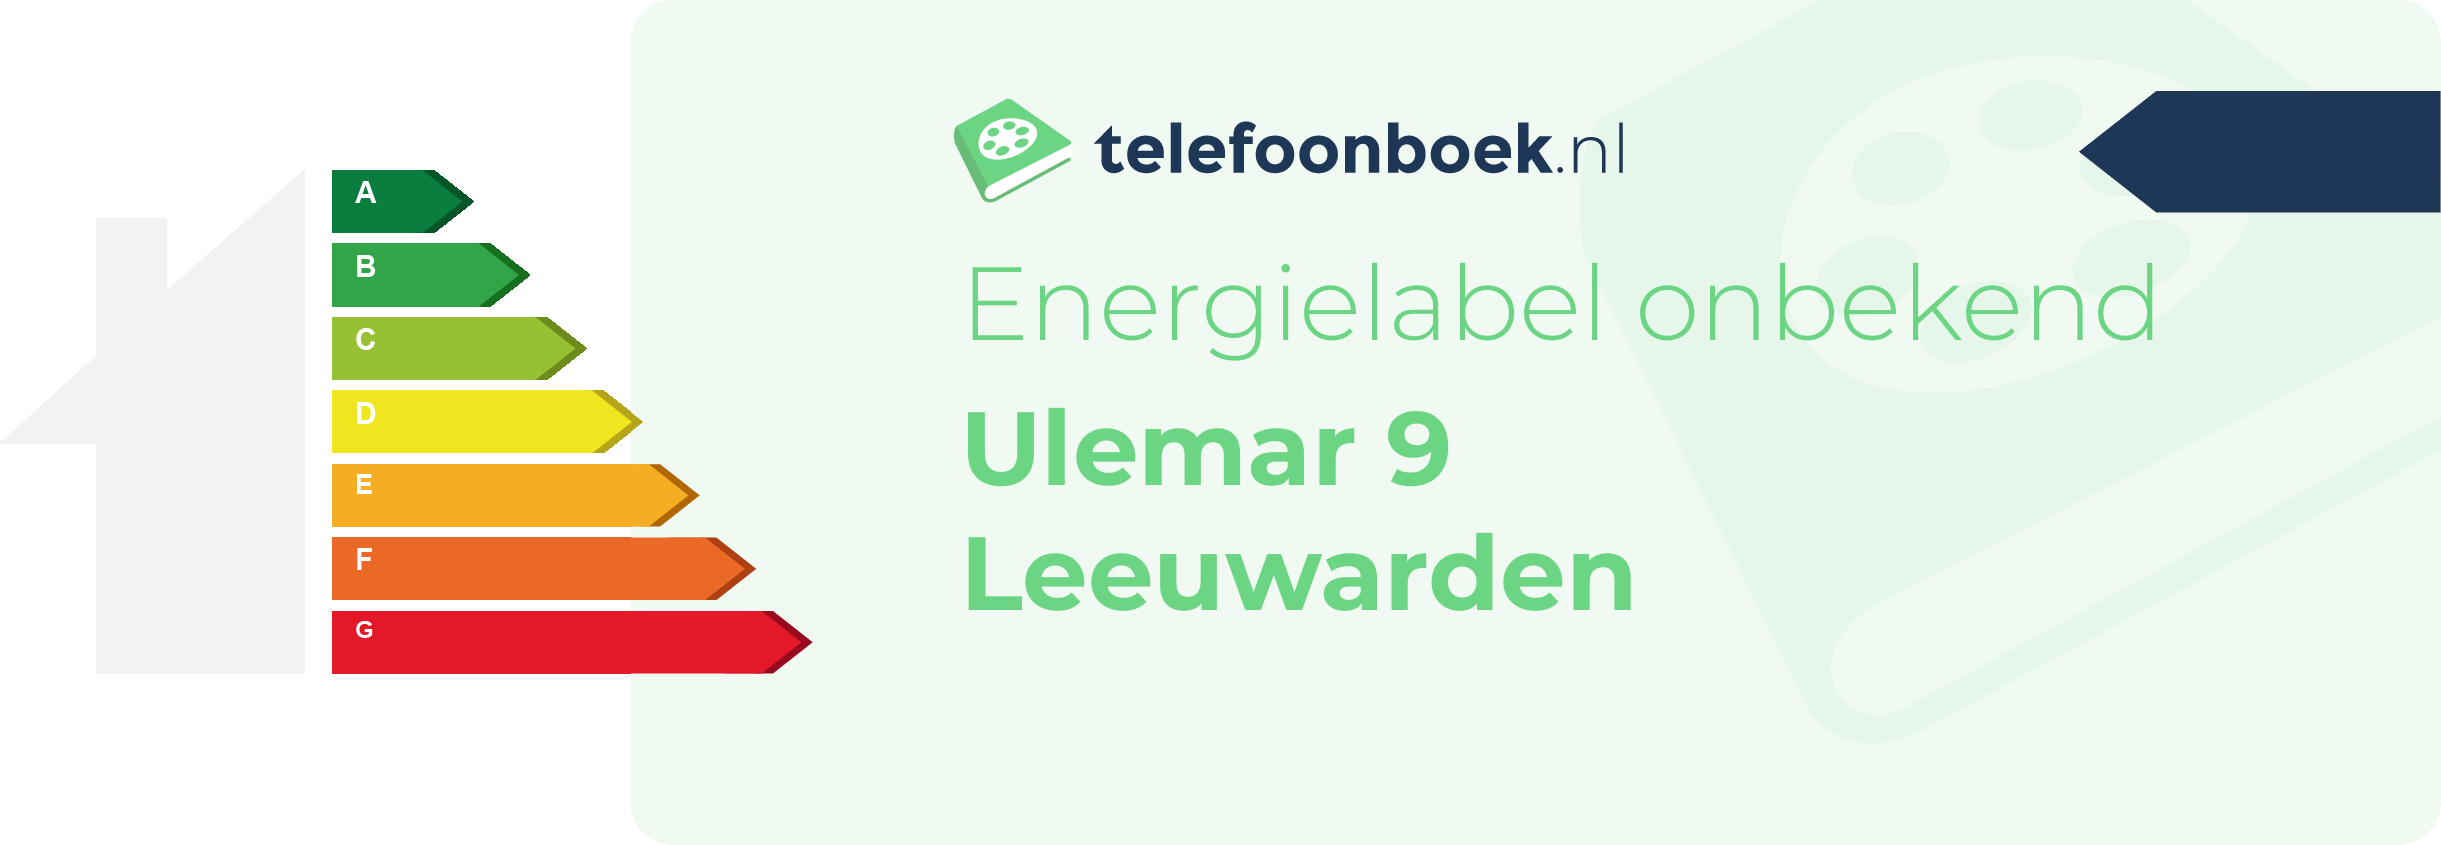 Energielabel Ulemar 9 Leeuwarden